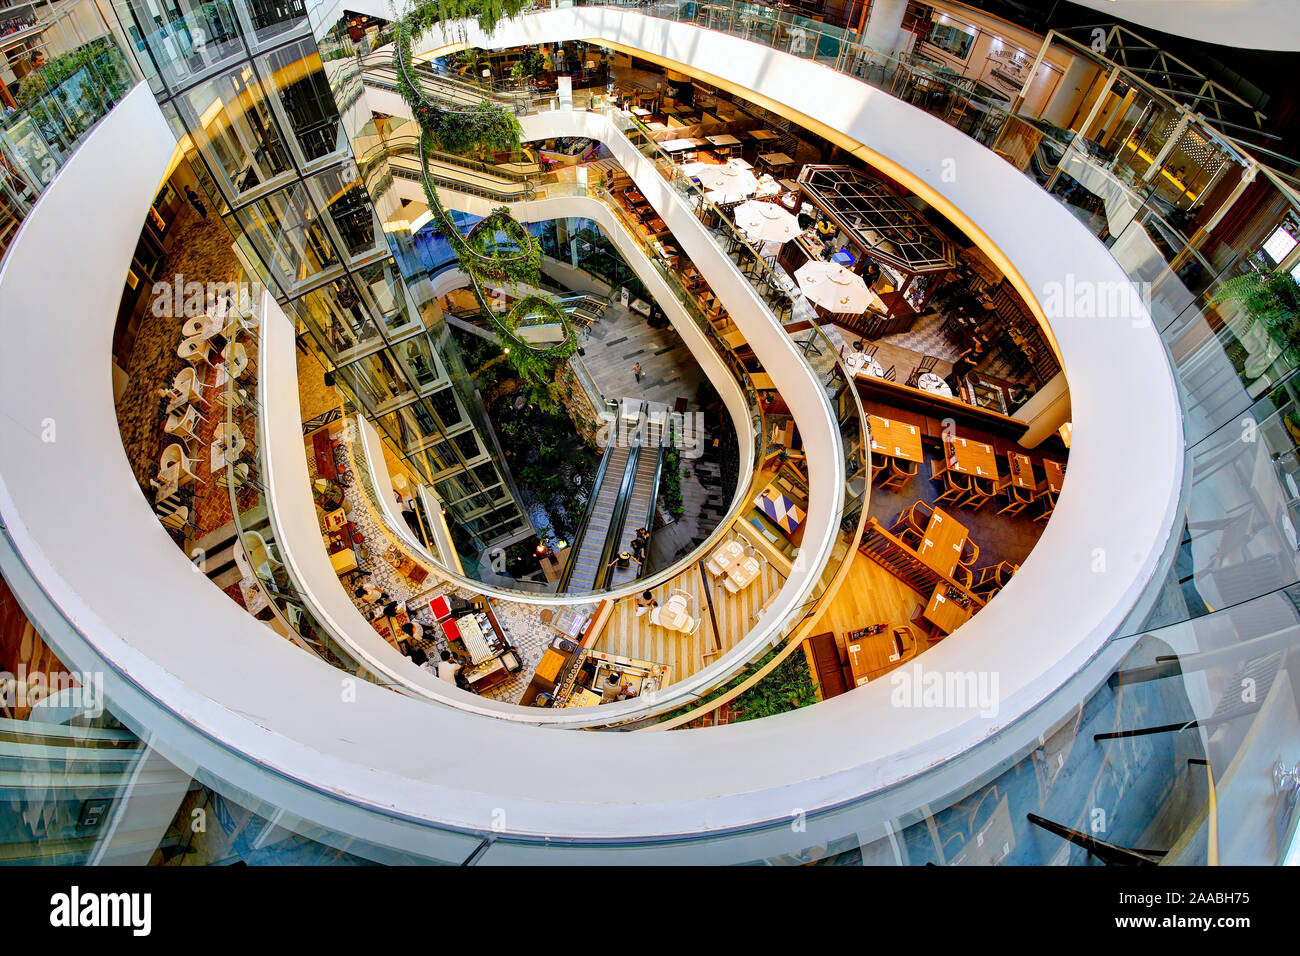 The Emporium department store and shopping centre Bangkok Thailand Stock  Photo - Alamy